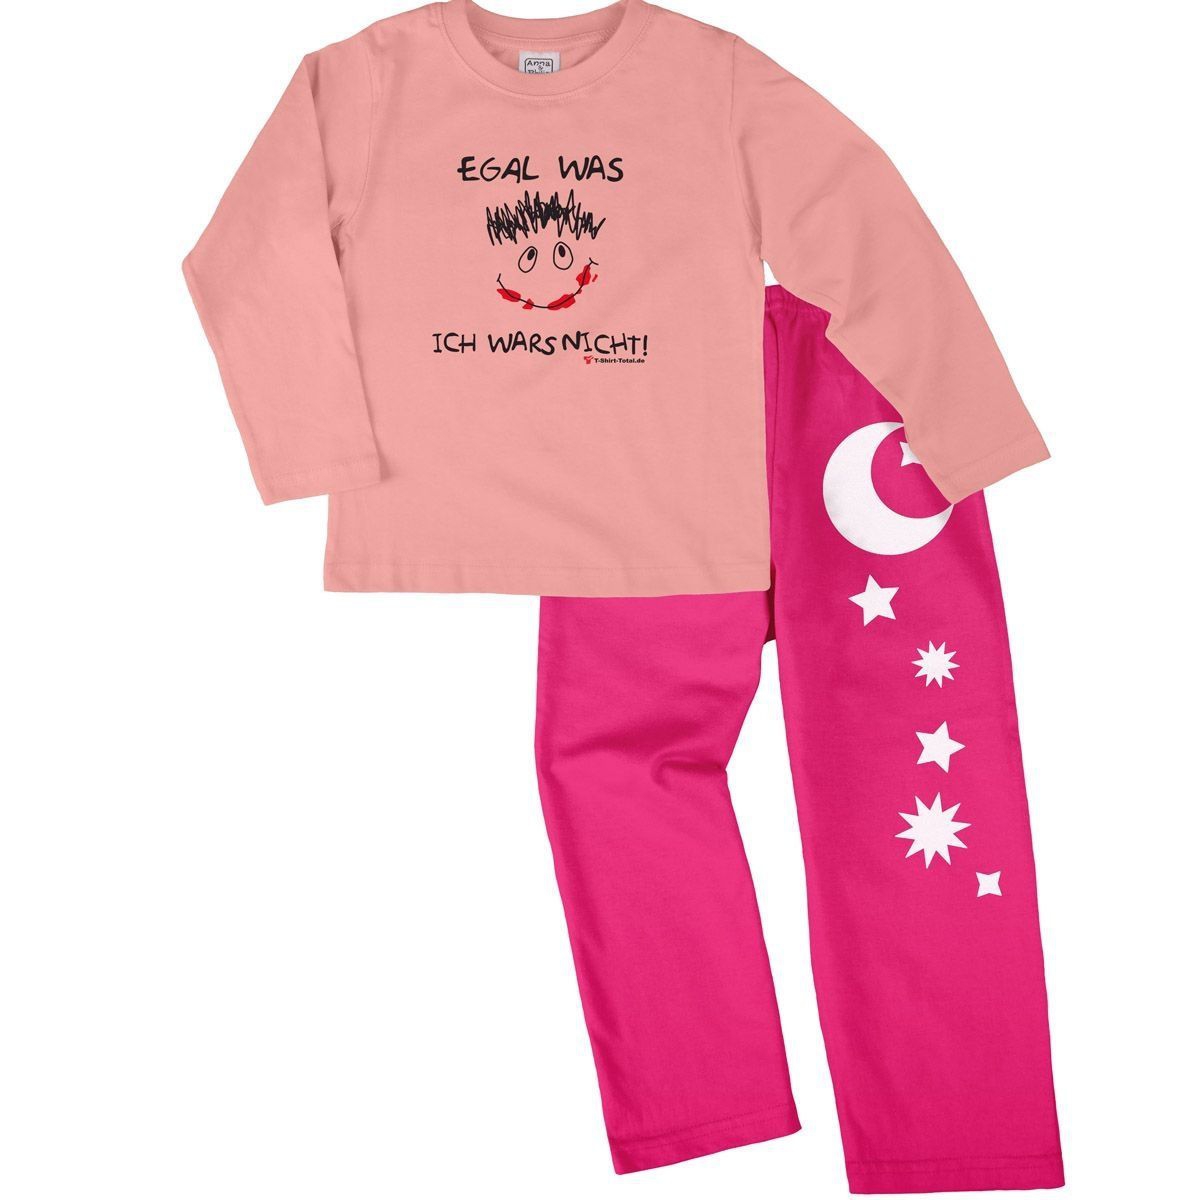 Egal was Pyjama Set rosa / pink 110 / 116